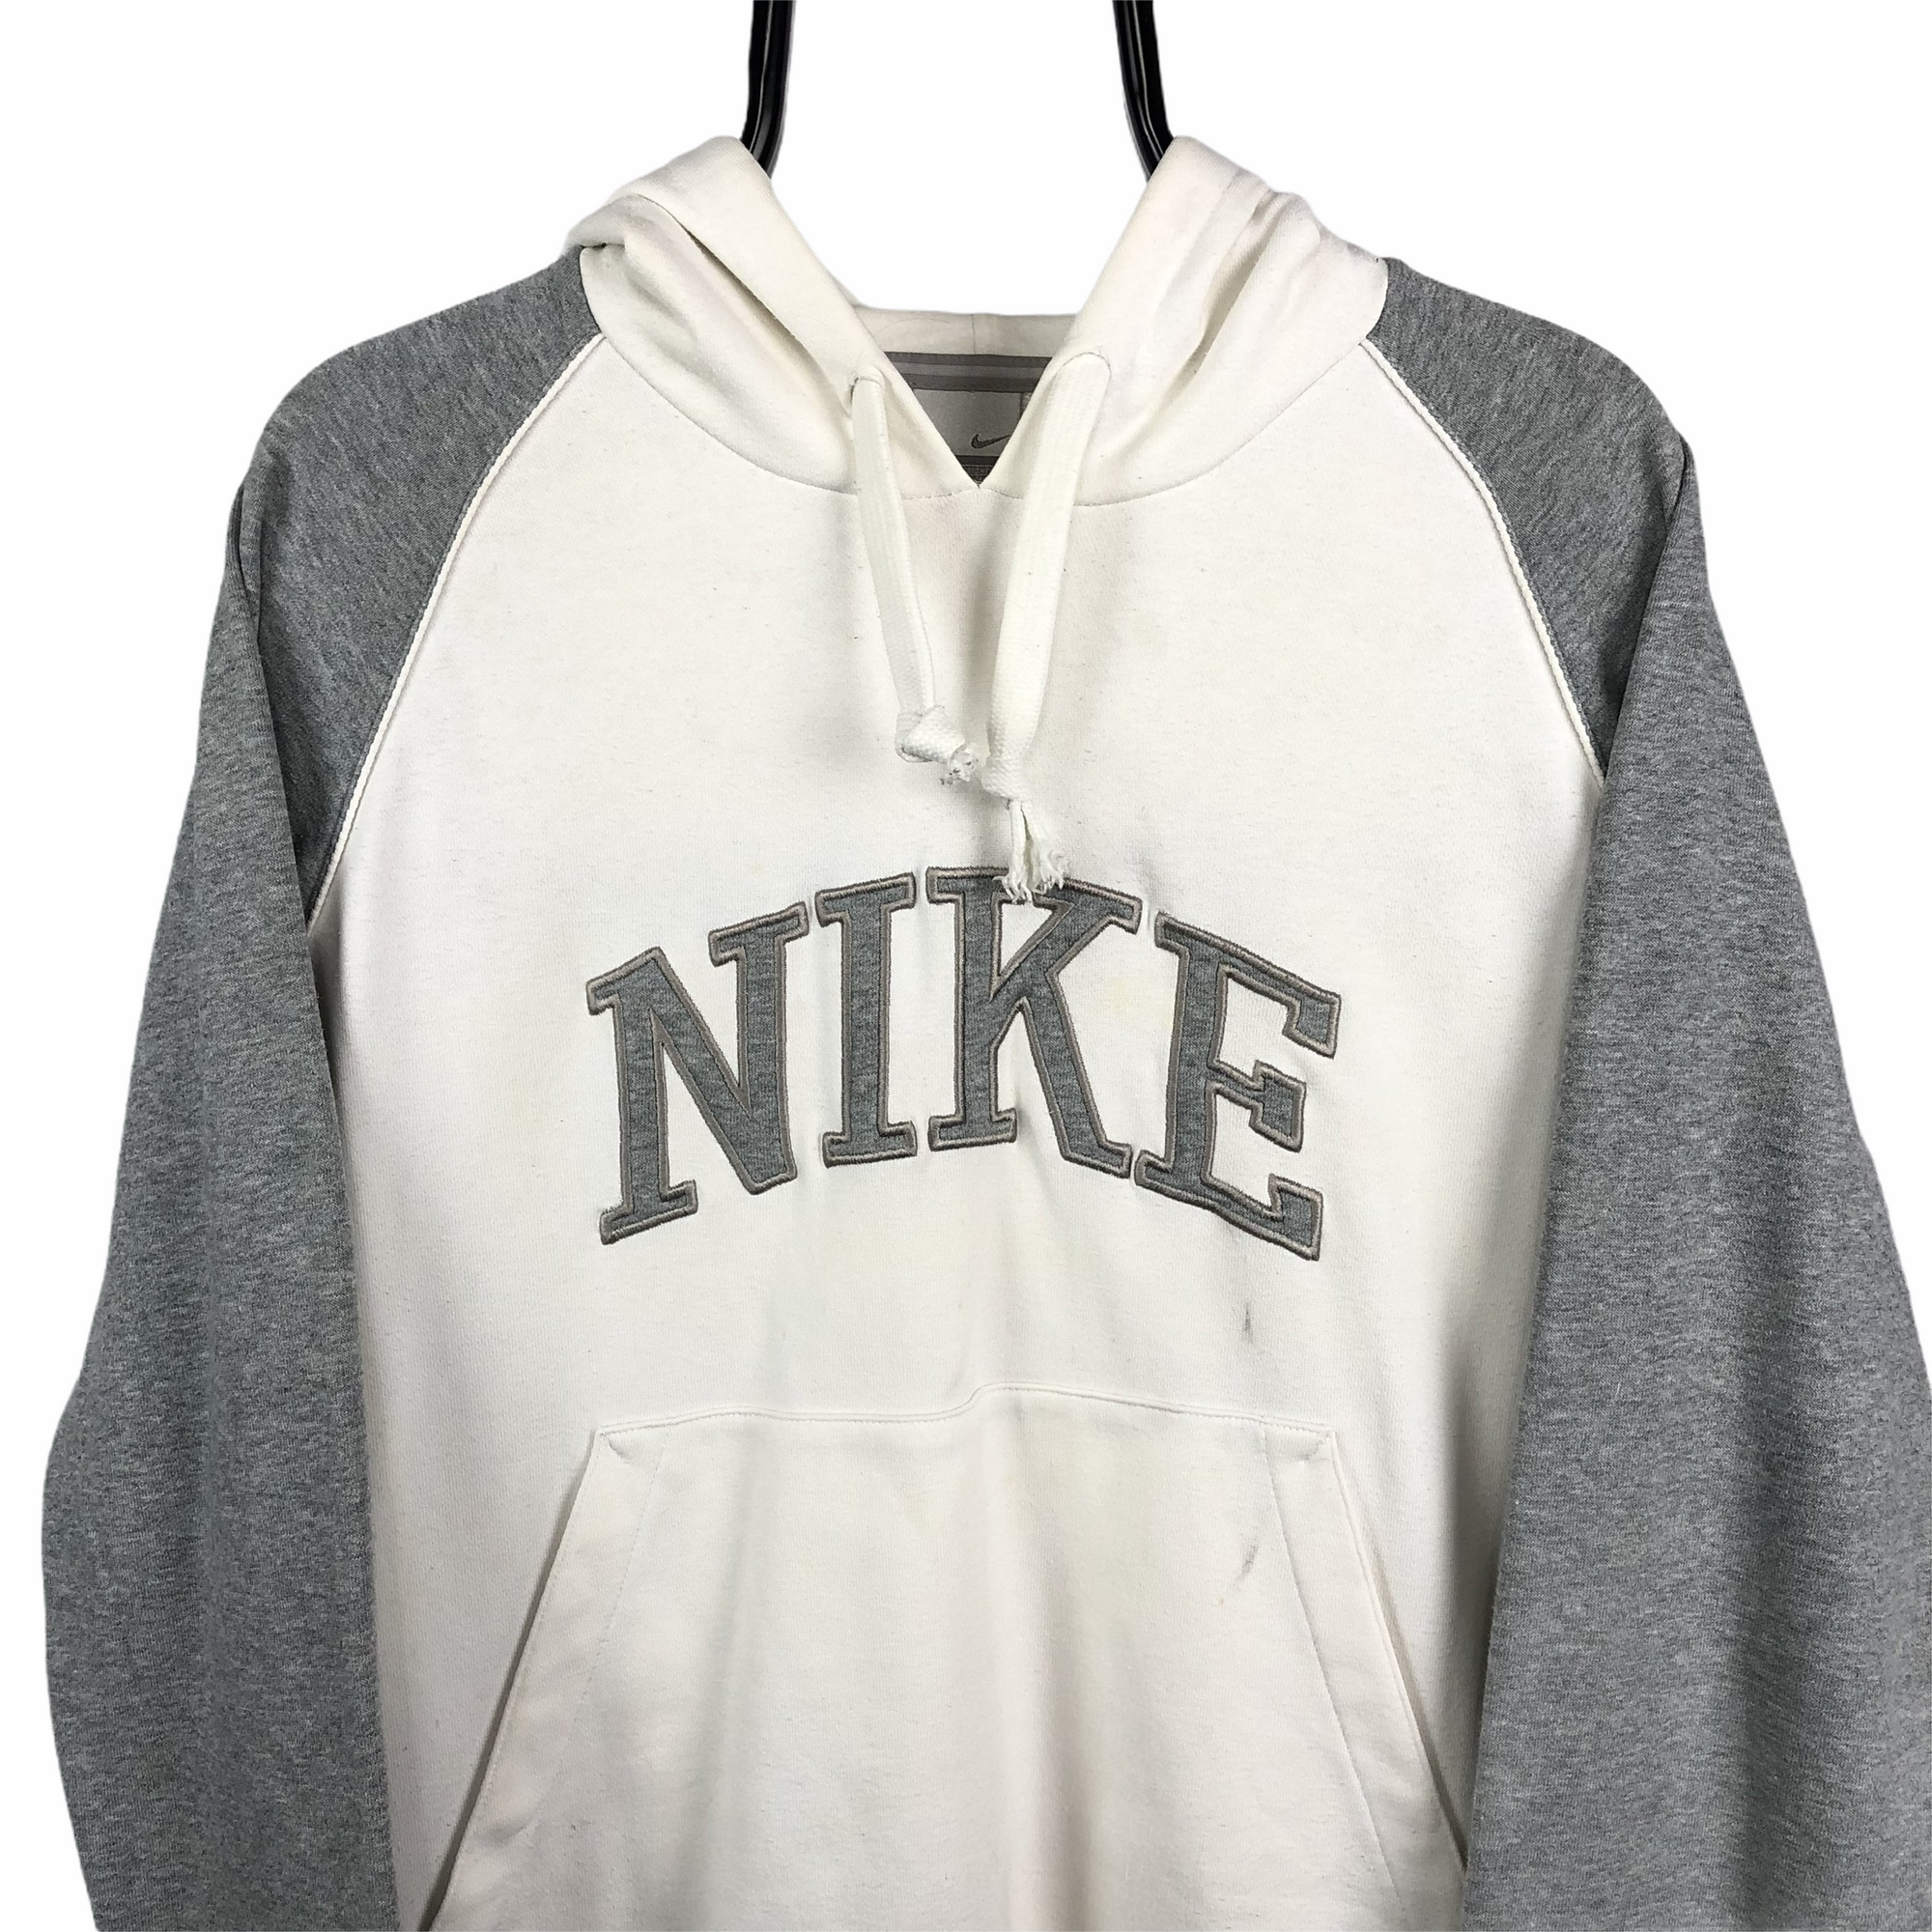 Vintage 00s Nike Spellout Hoodie in White/Grey - Men's Small/Women's Medium